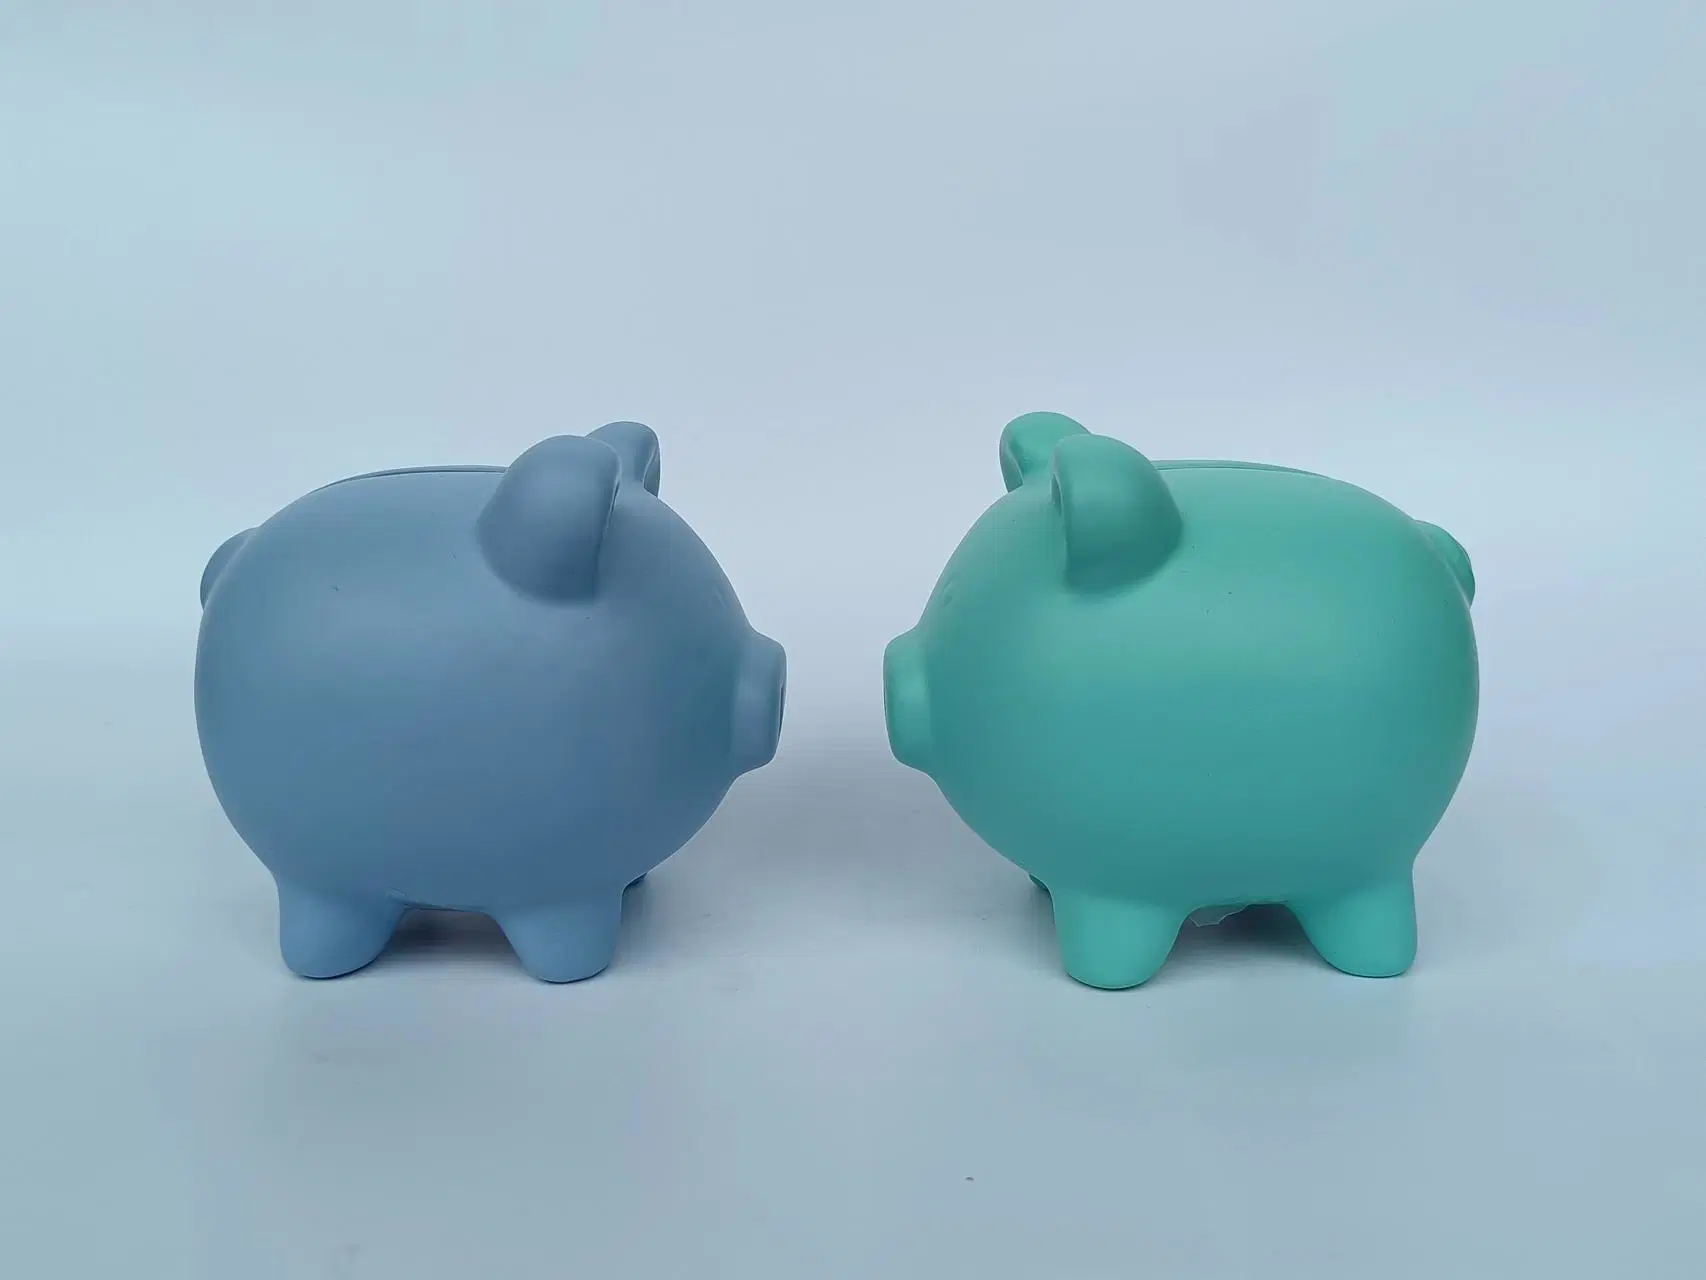 Ceramic Pig Piggy Banks Money Bank Coin Bank for Kids